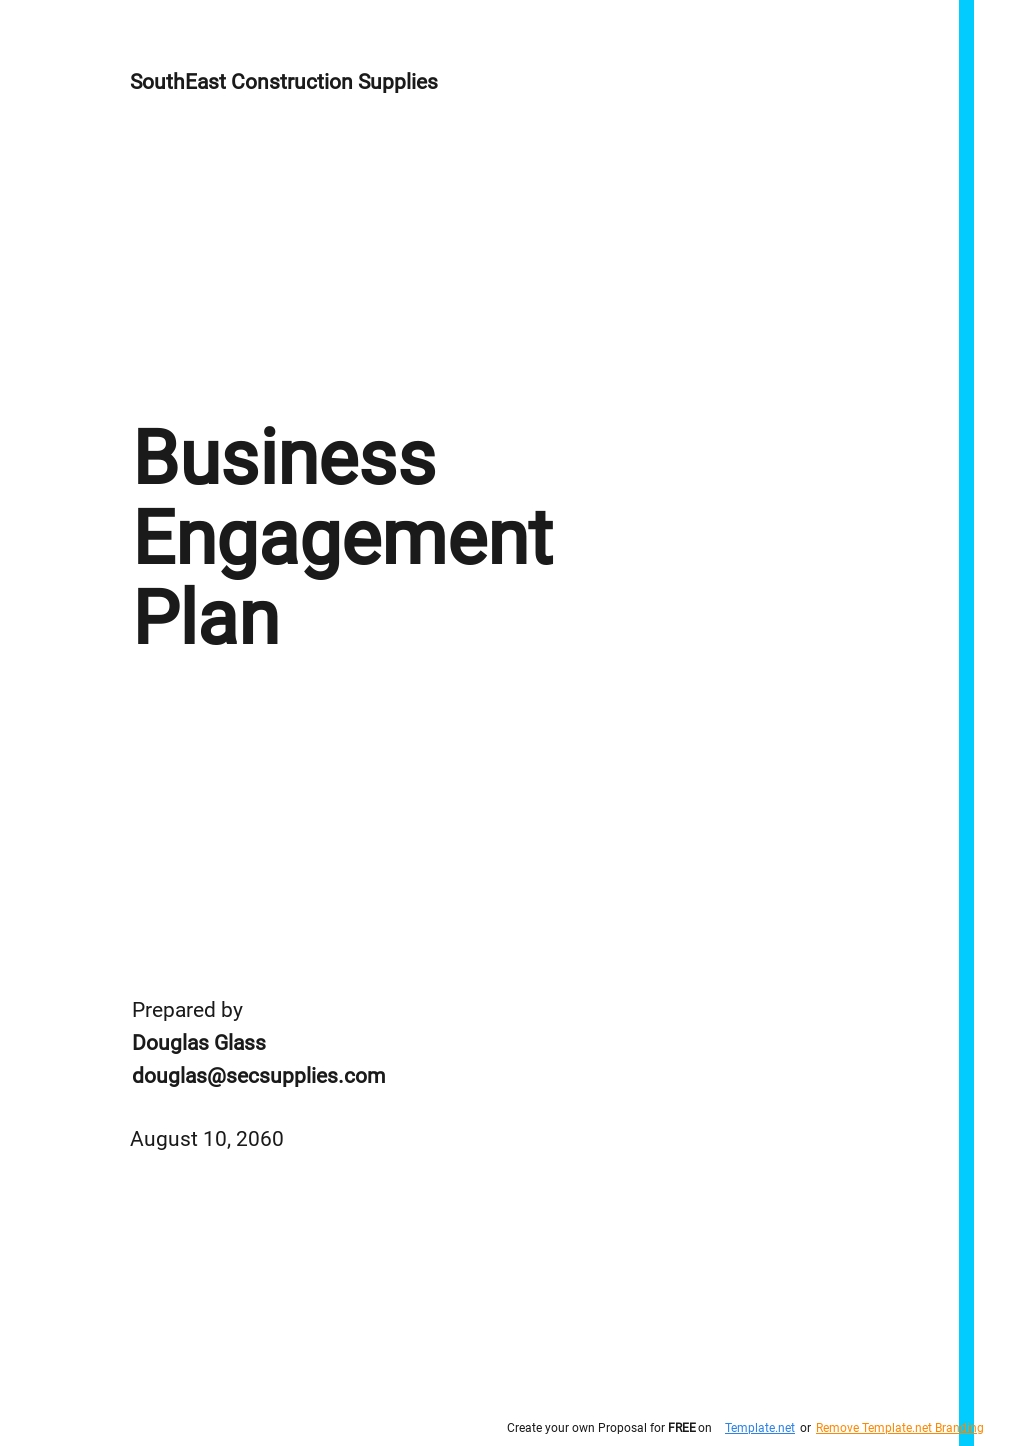 Business Engagement Plan Template 